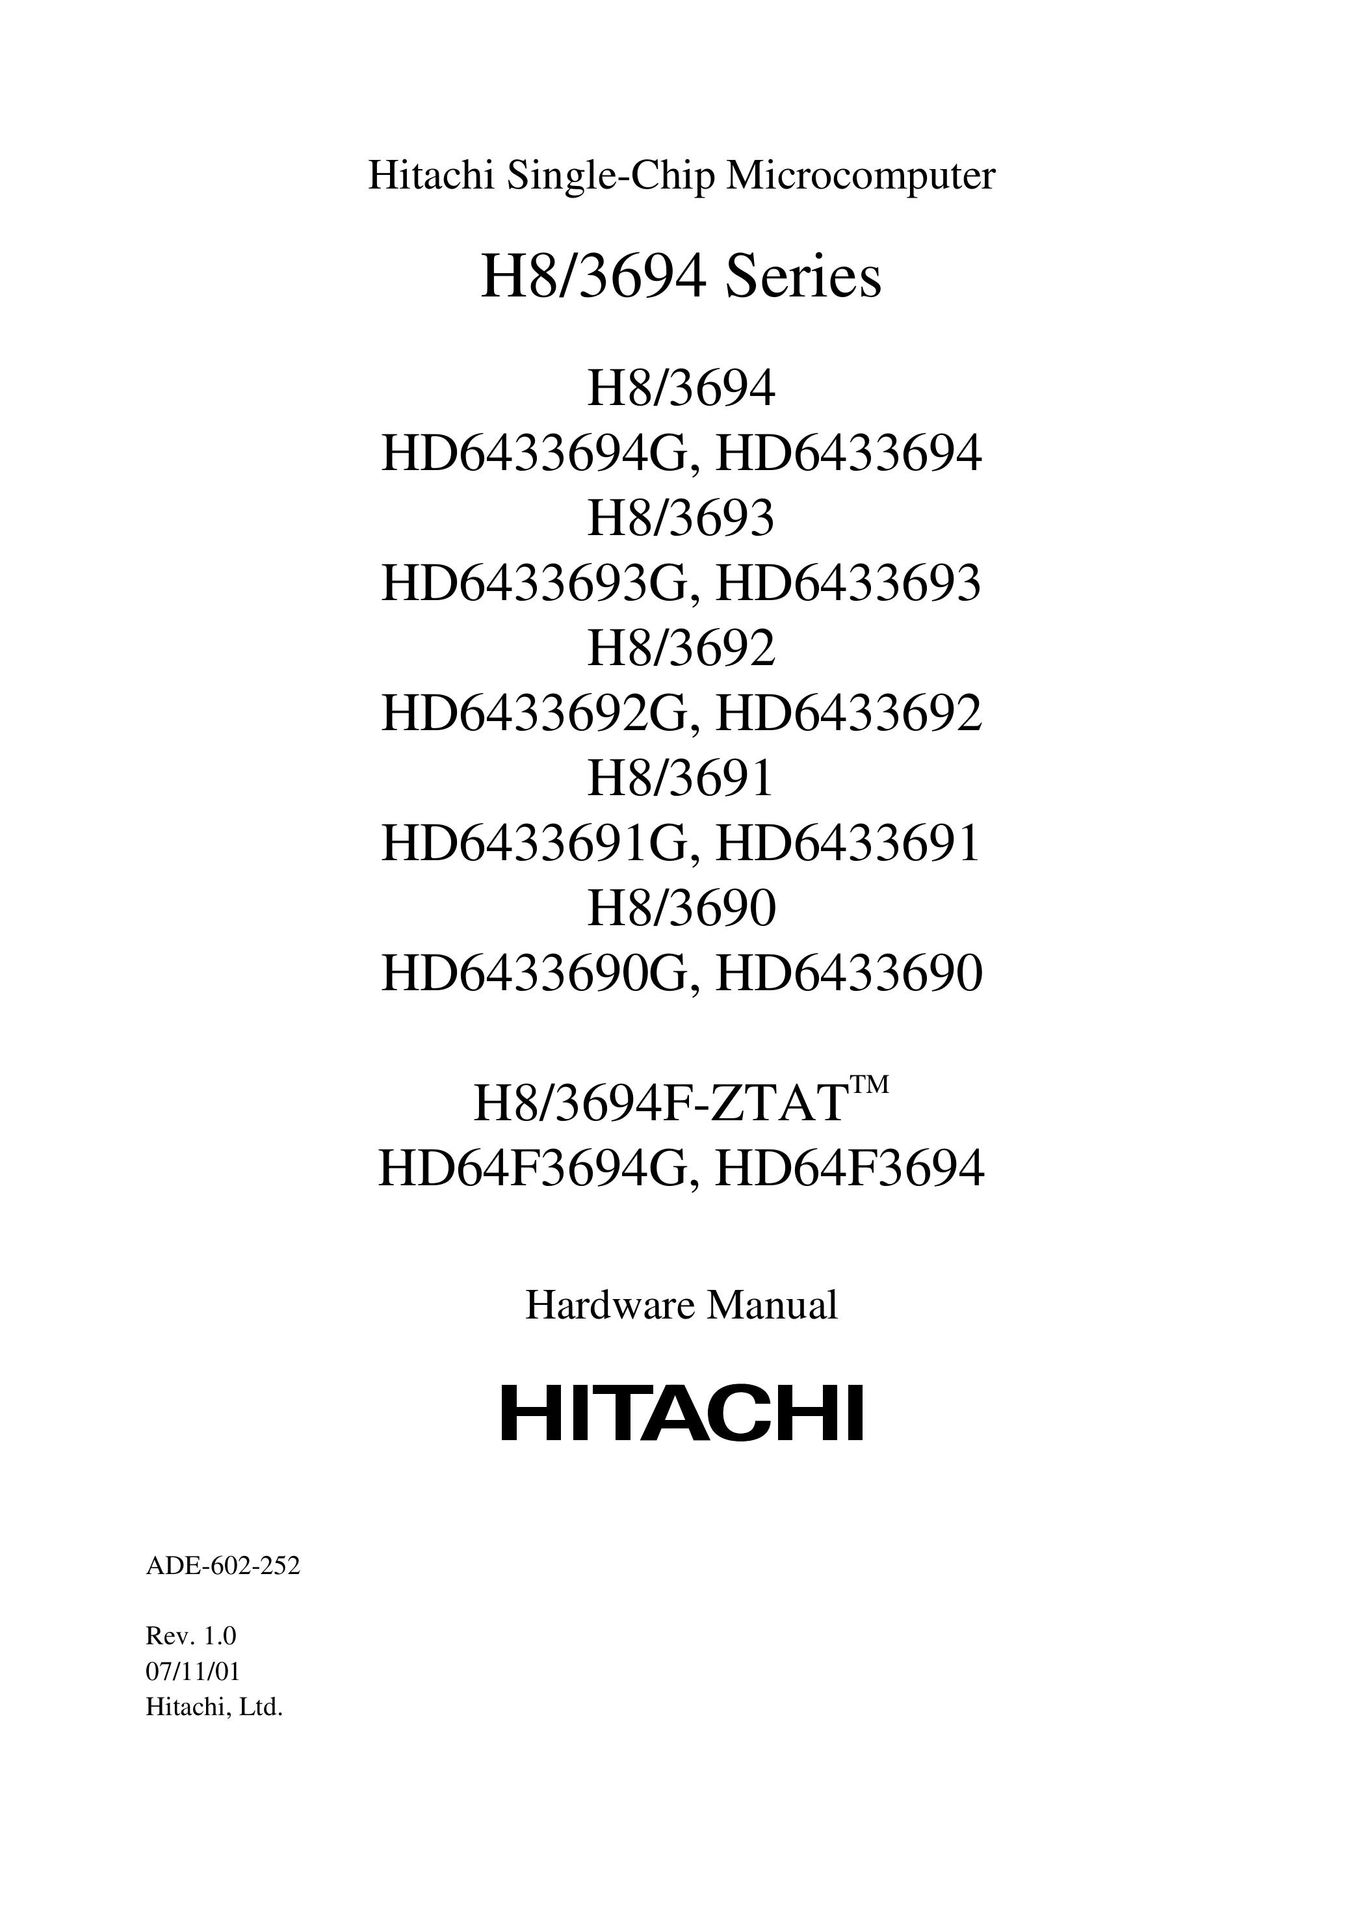 Hitachi HD6433693 TV Mount User Manual